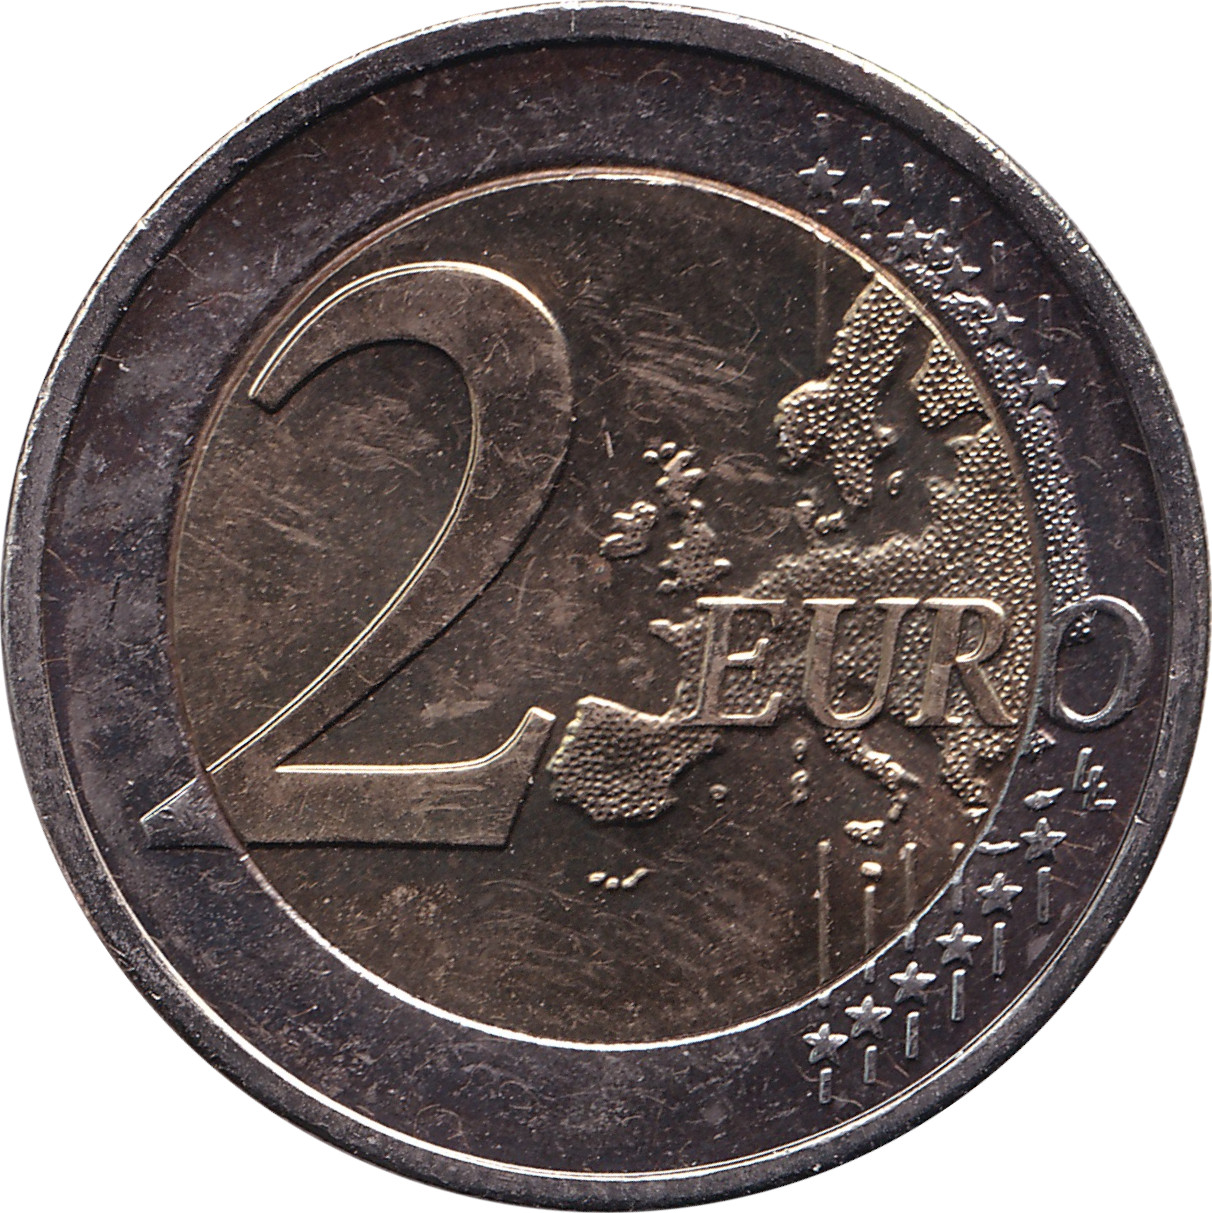 2 euro - Mise en circulation de l'Euro - Grèce